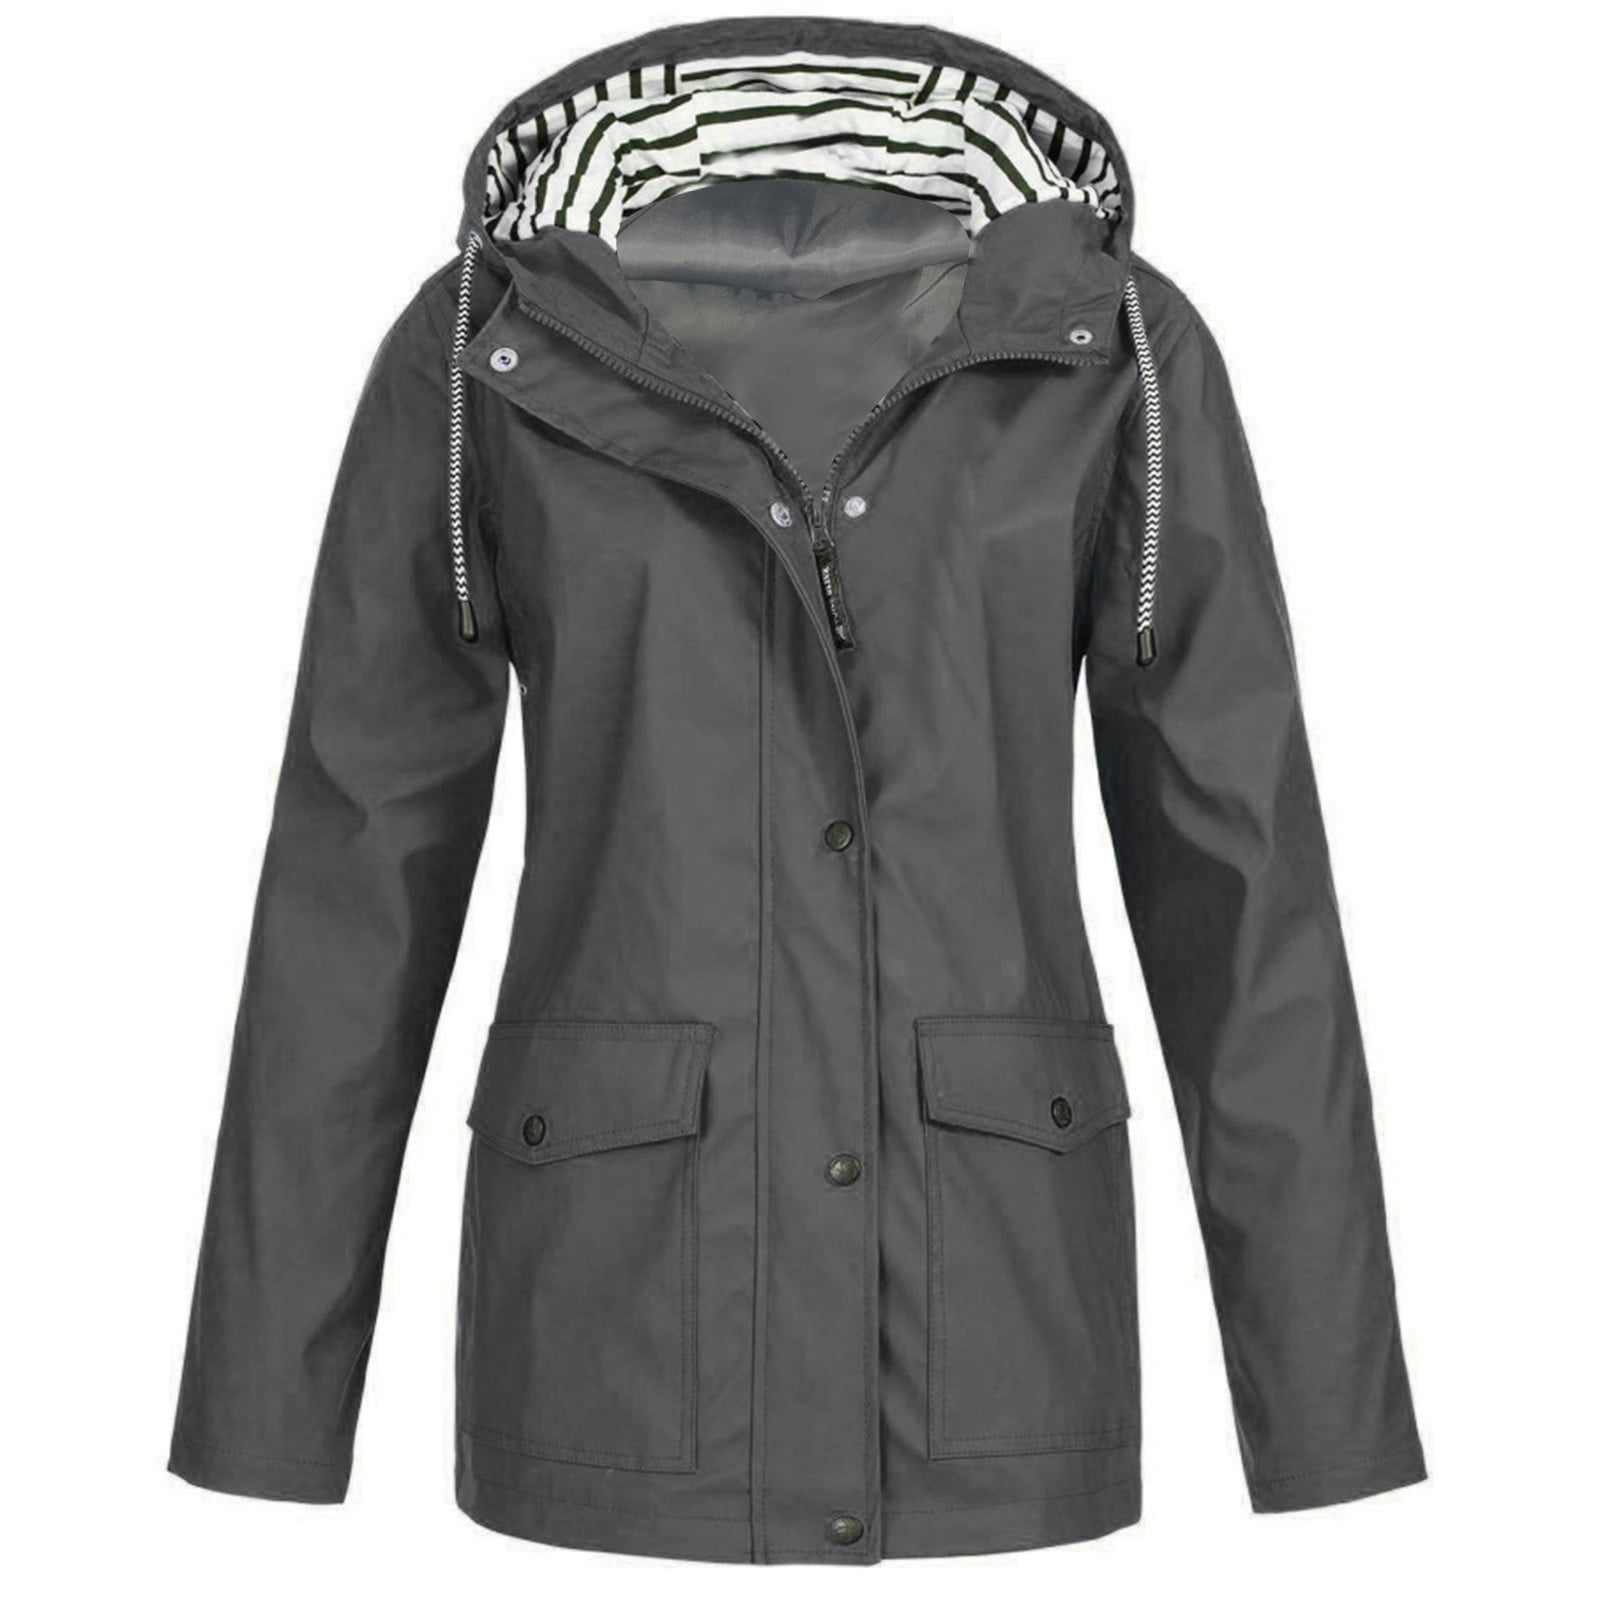 Viikei Women Coats Clearance Women Solid Rain Jacket Outdoor Plus Size ...